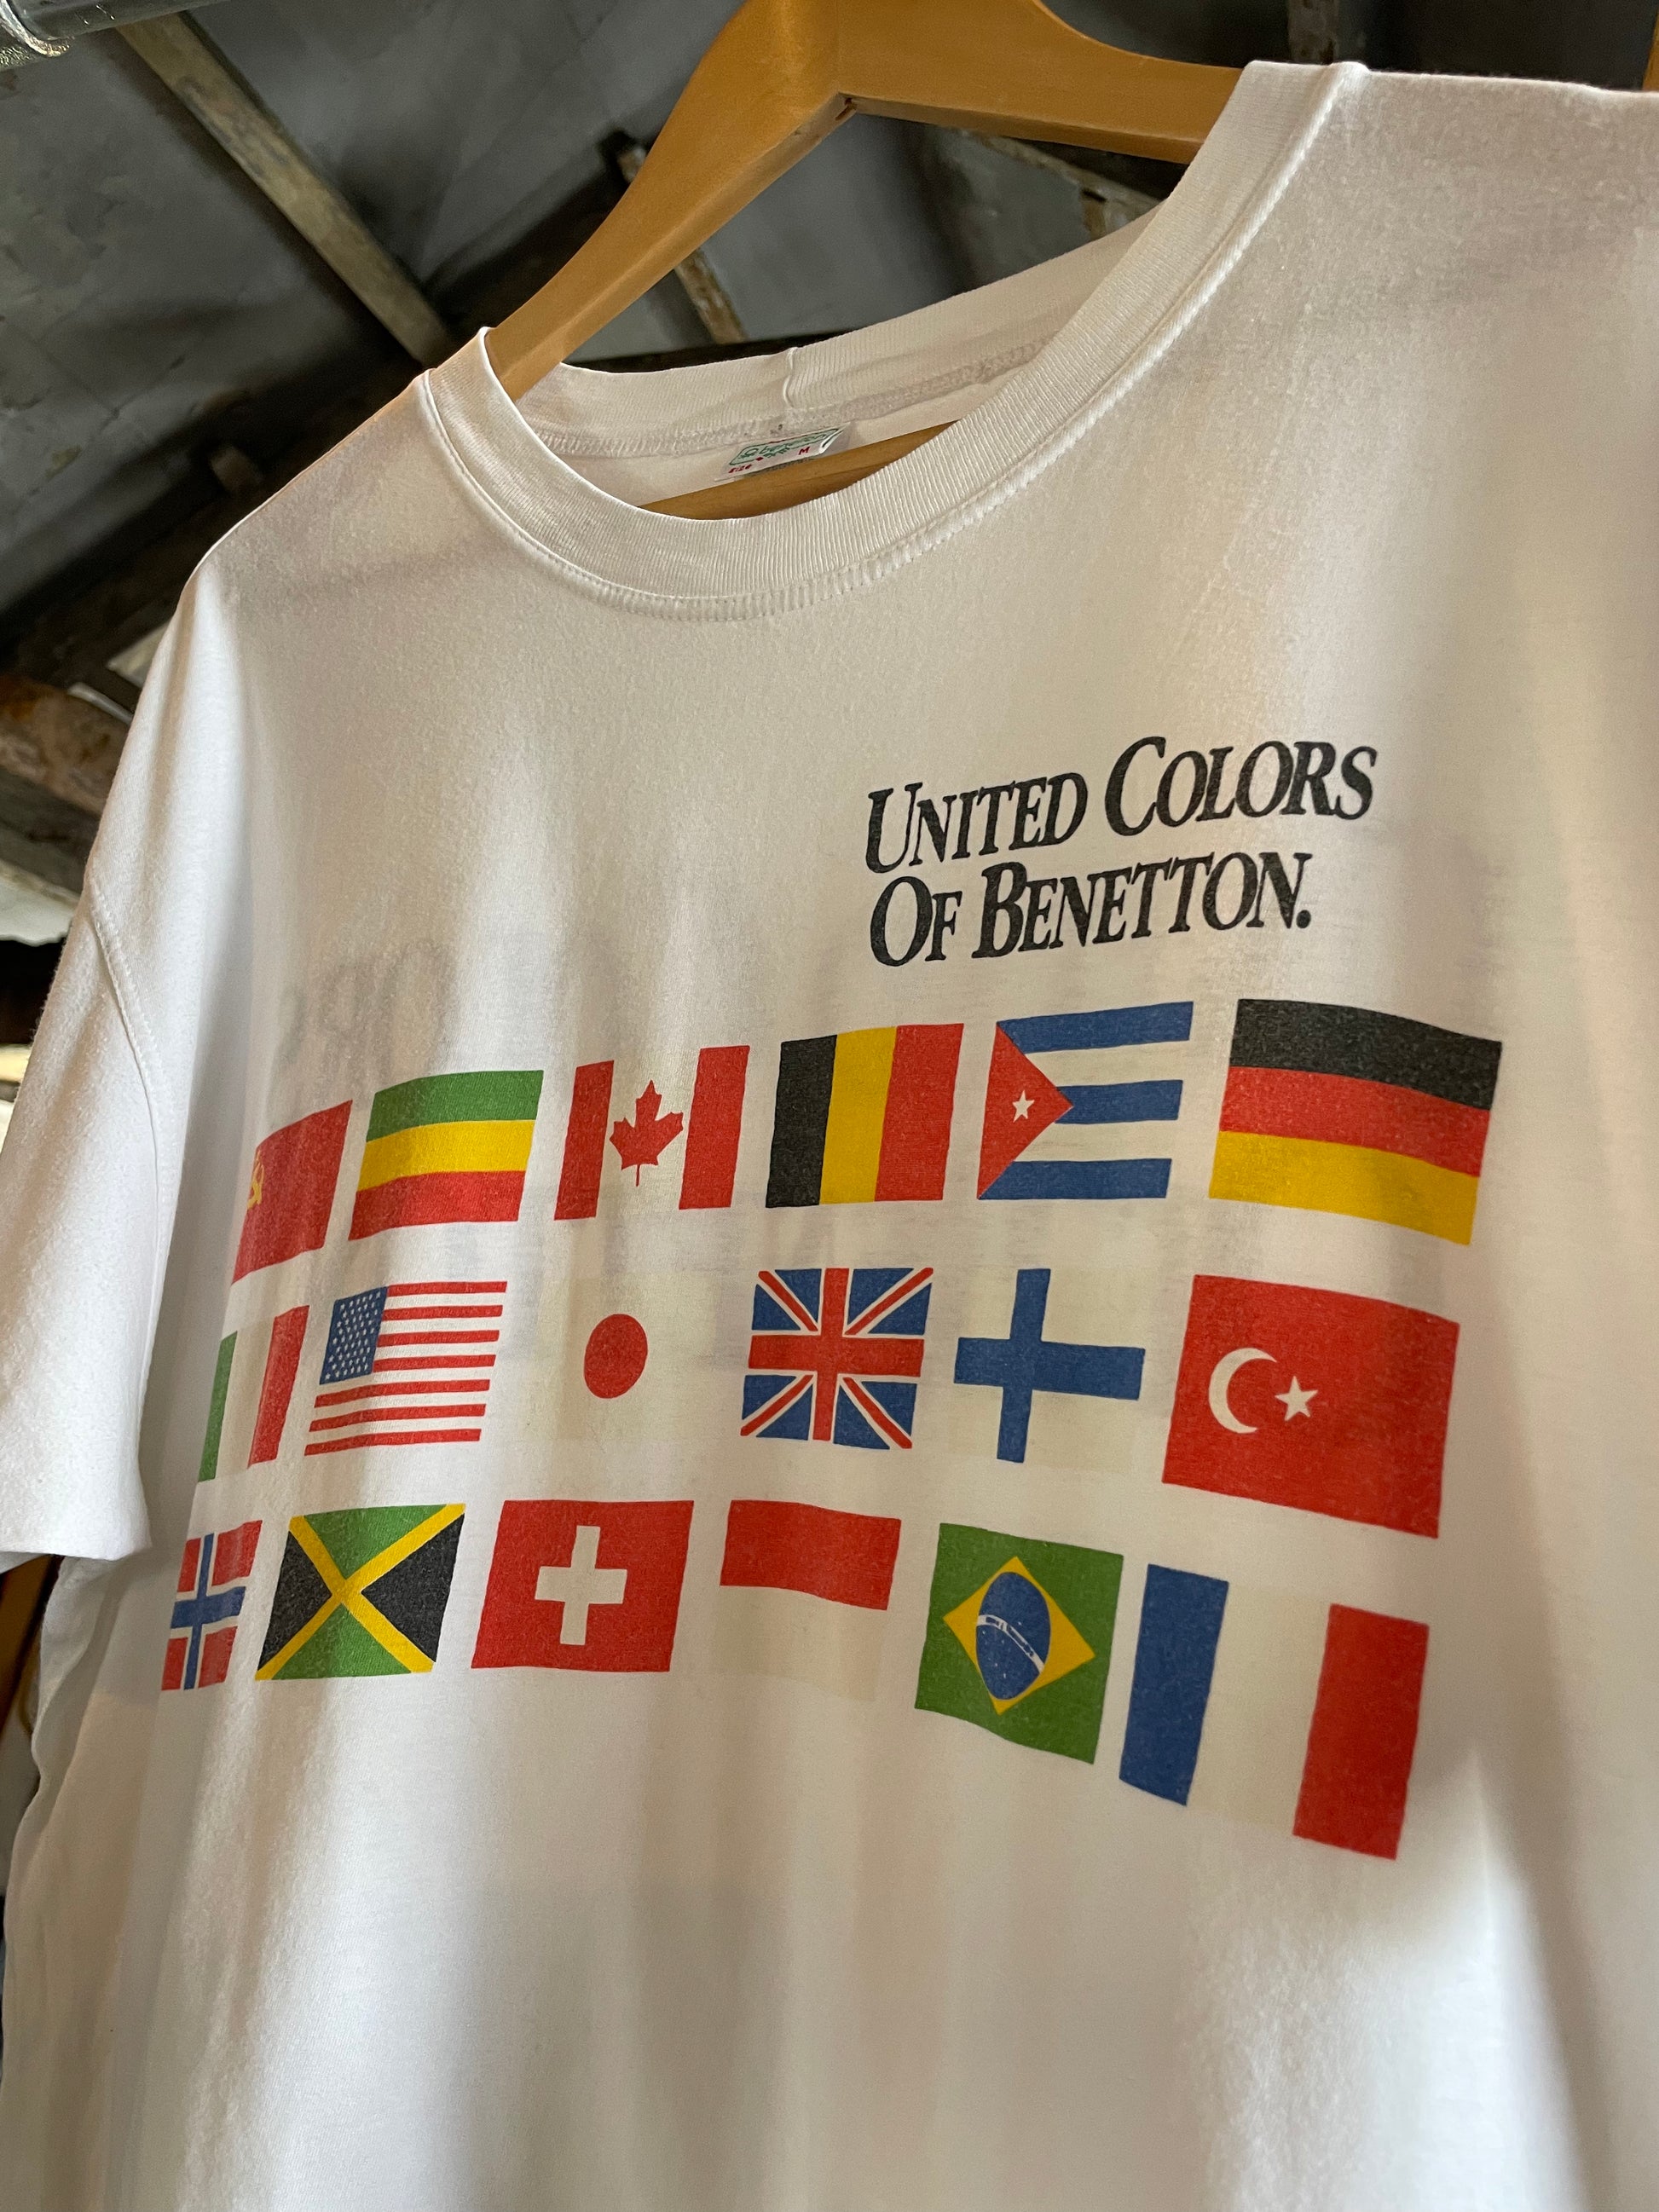 – United Benetton of Flag workingclassherovintage T-Shirt Colors